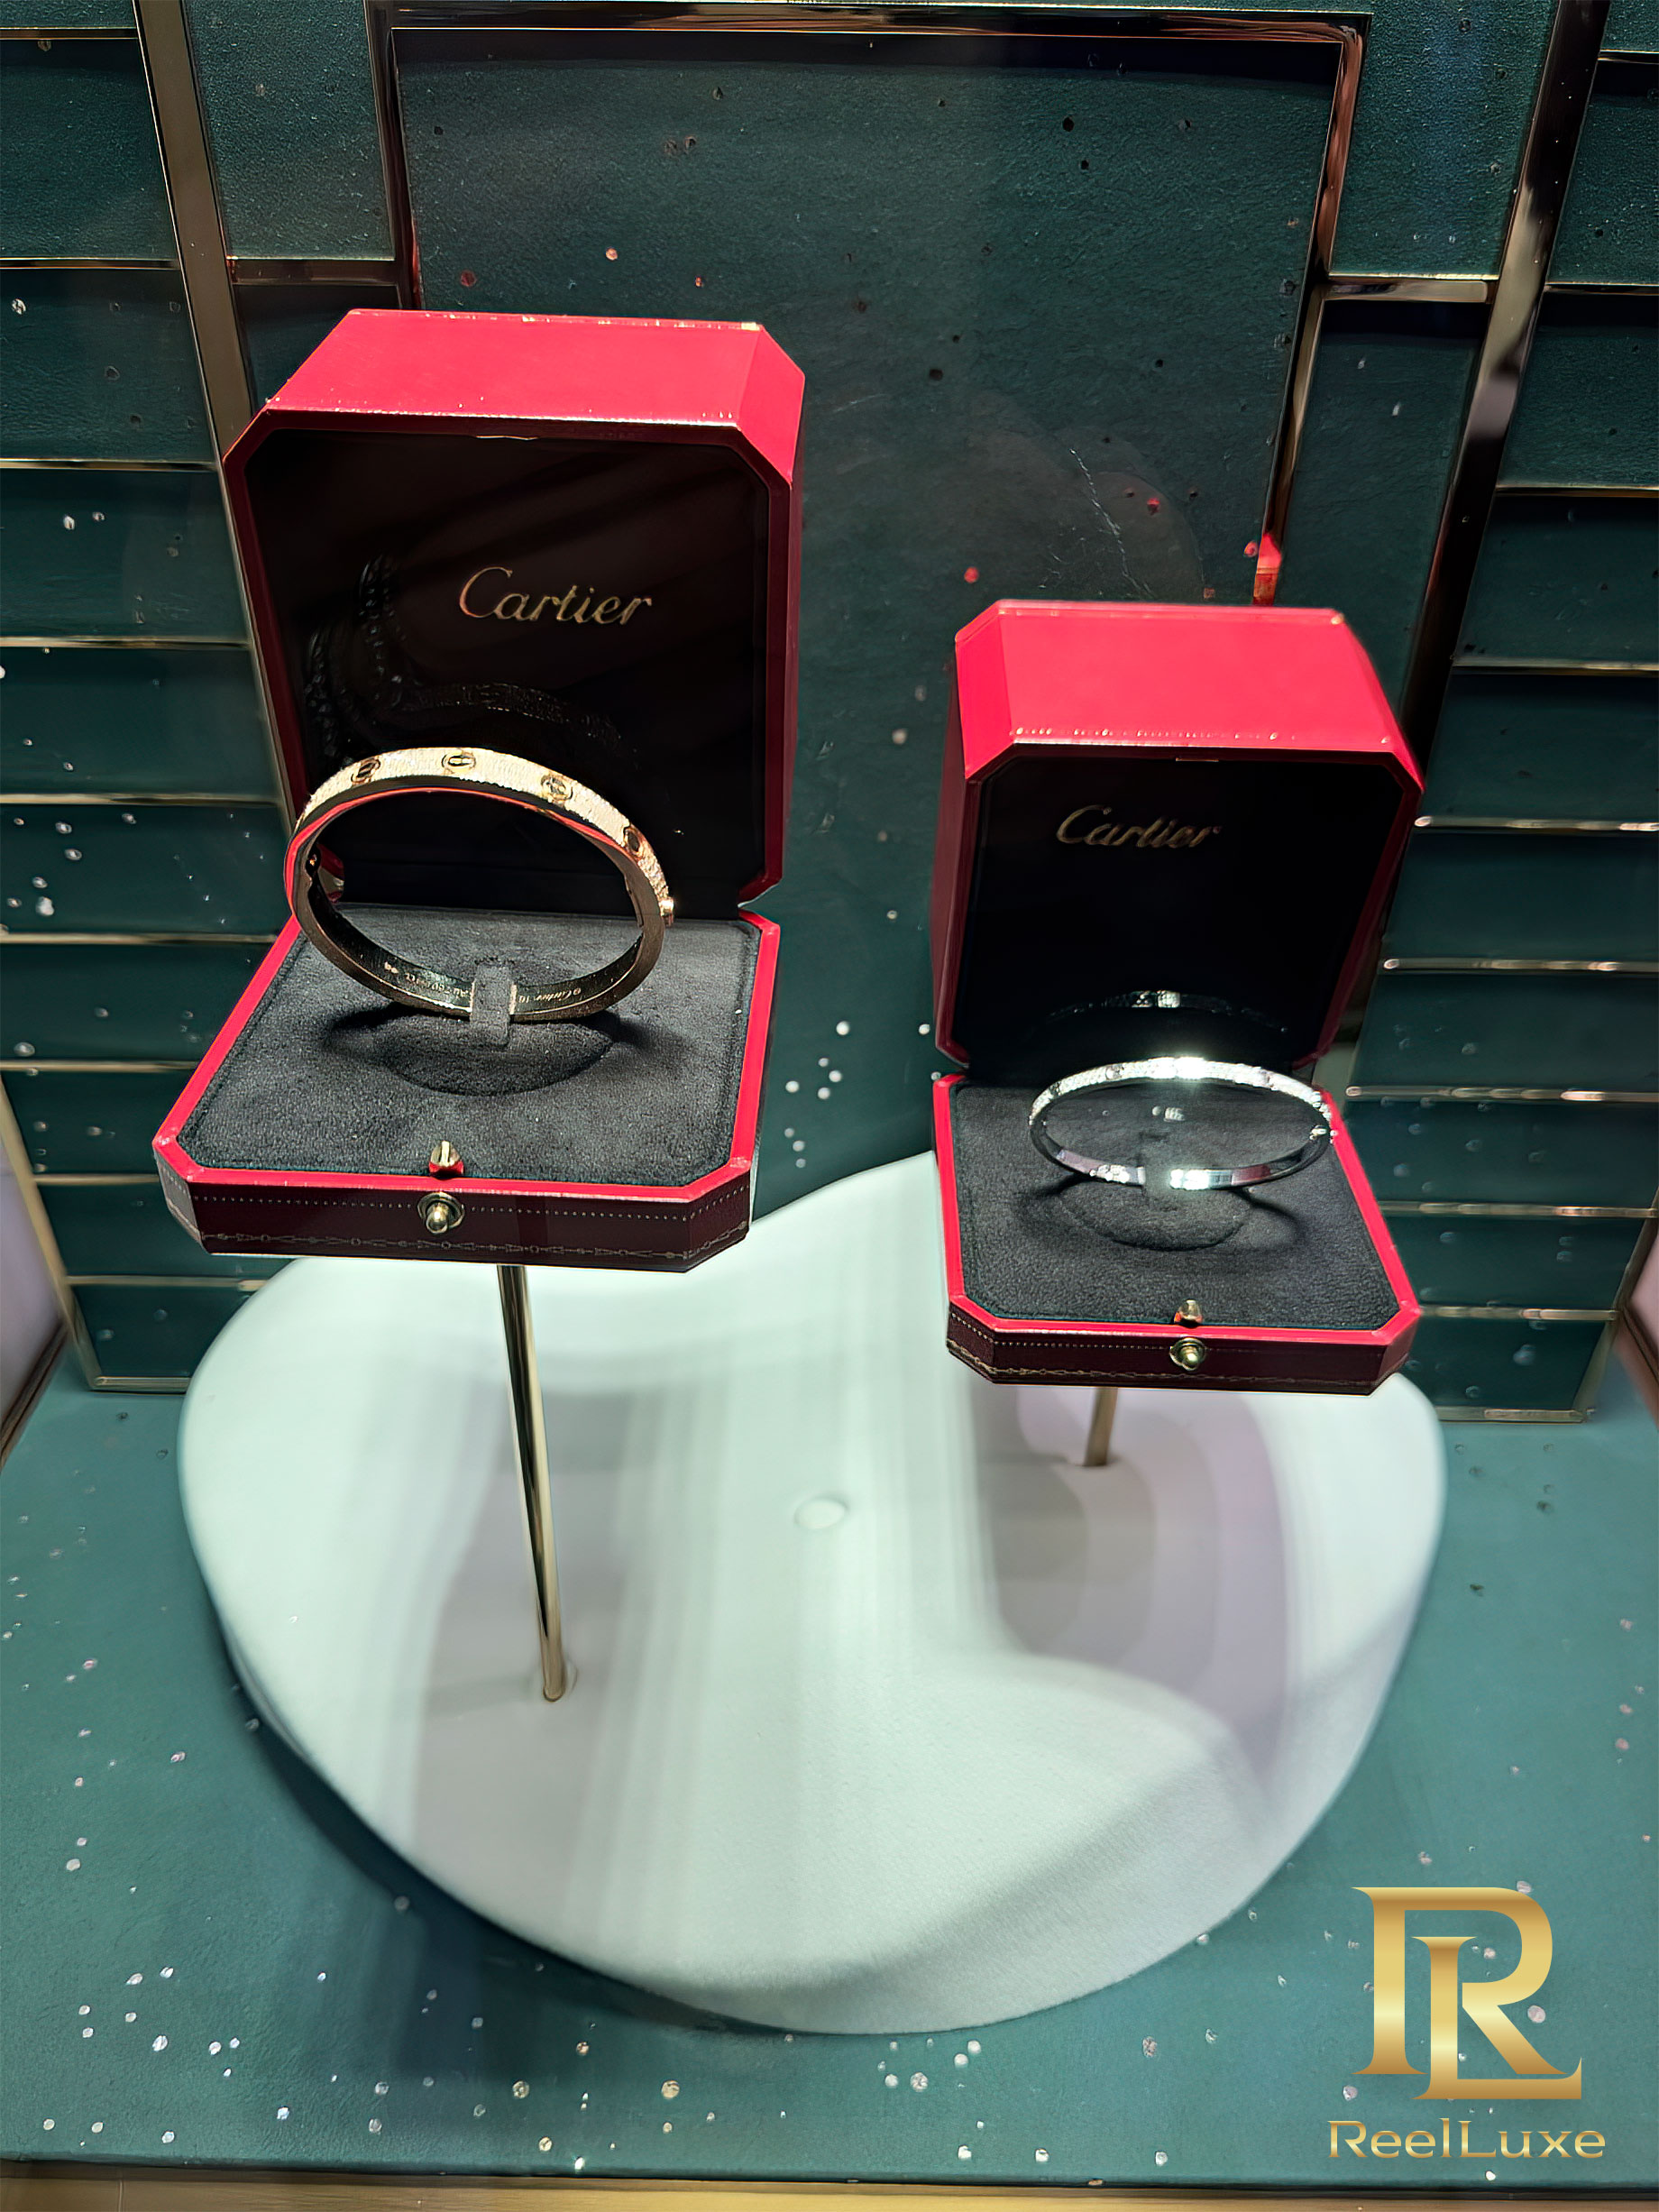 Cartier LOVE Bracelet Diamond-Paved - Boutique Cartier Firenze - Florence, Italy